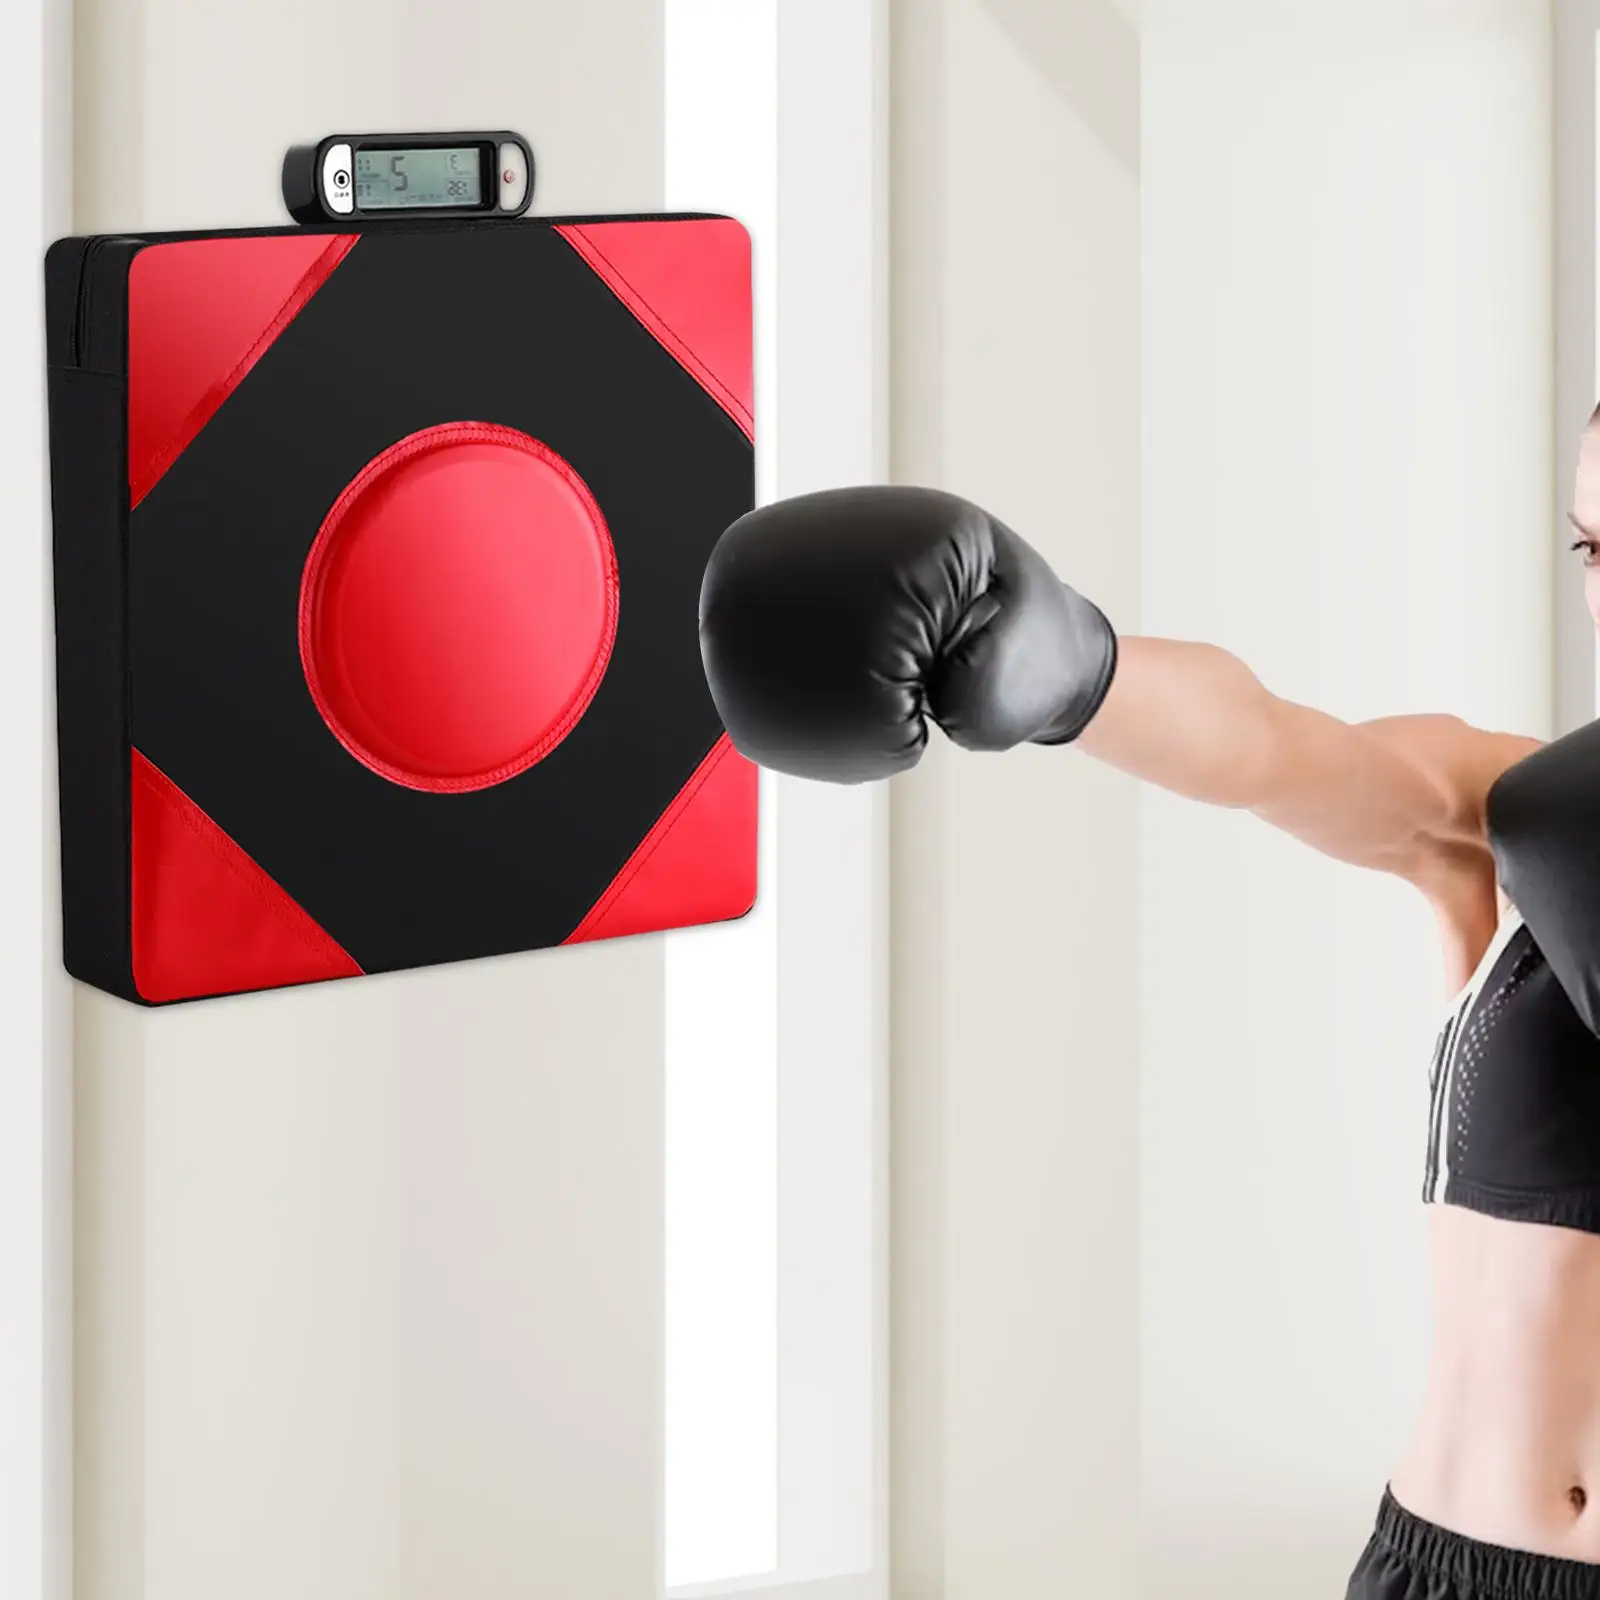 Boxing Machine Digital Display Exercise Fitness Boxing Training Target